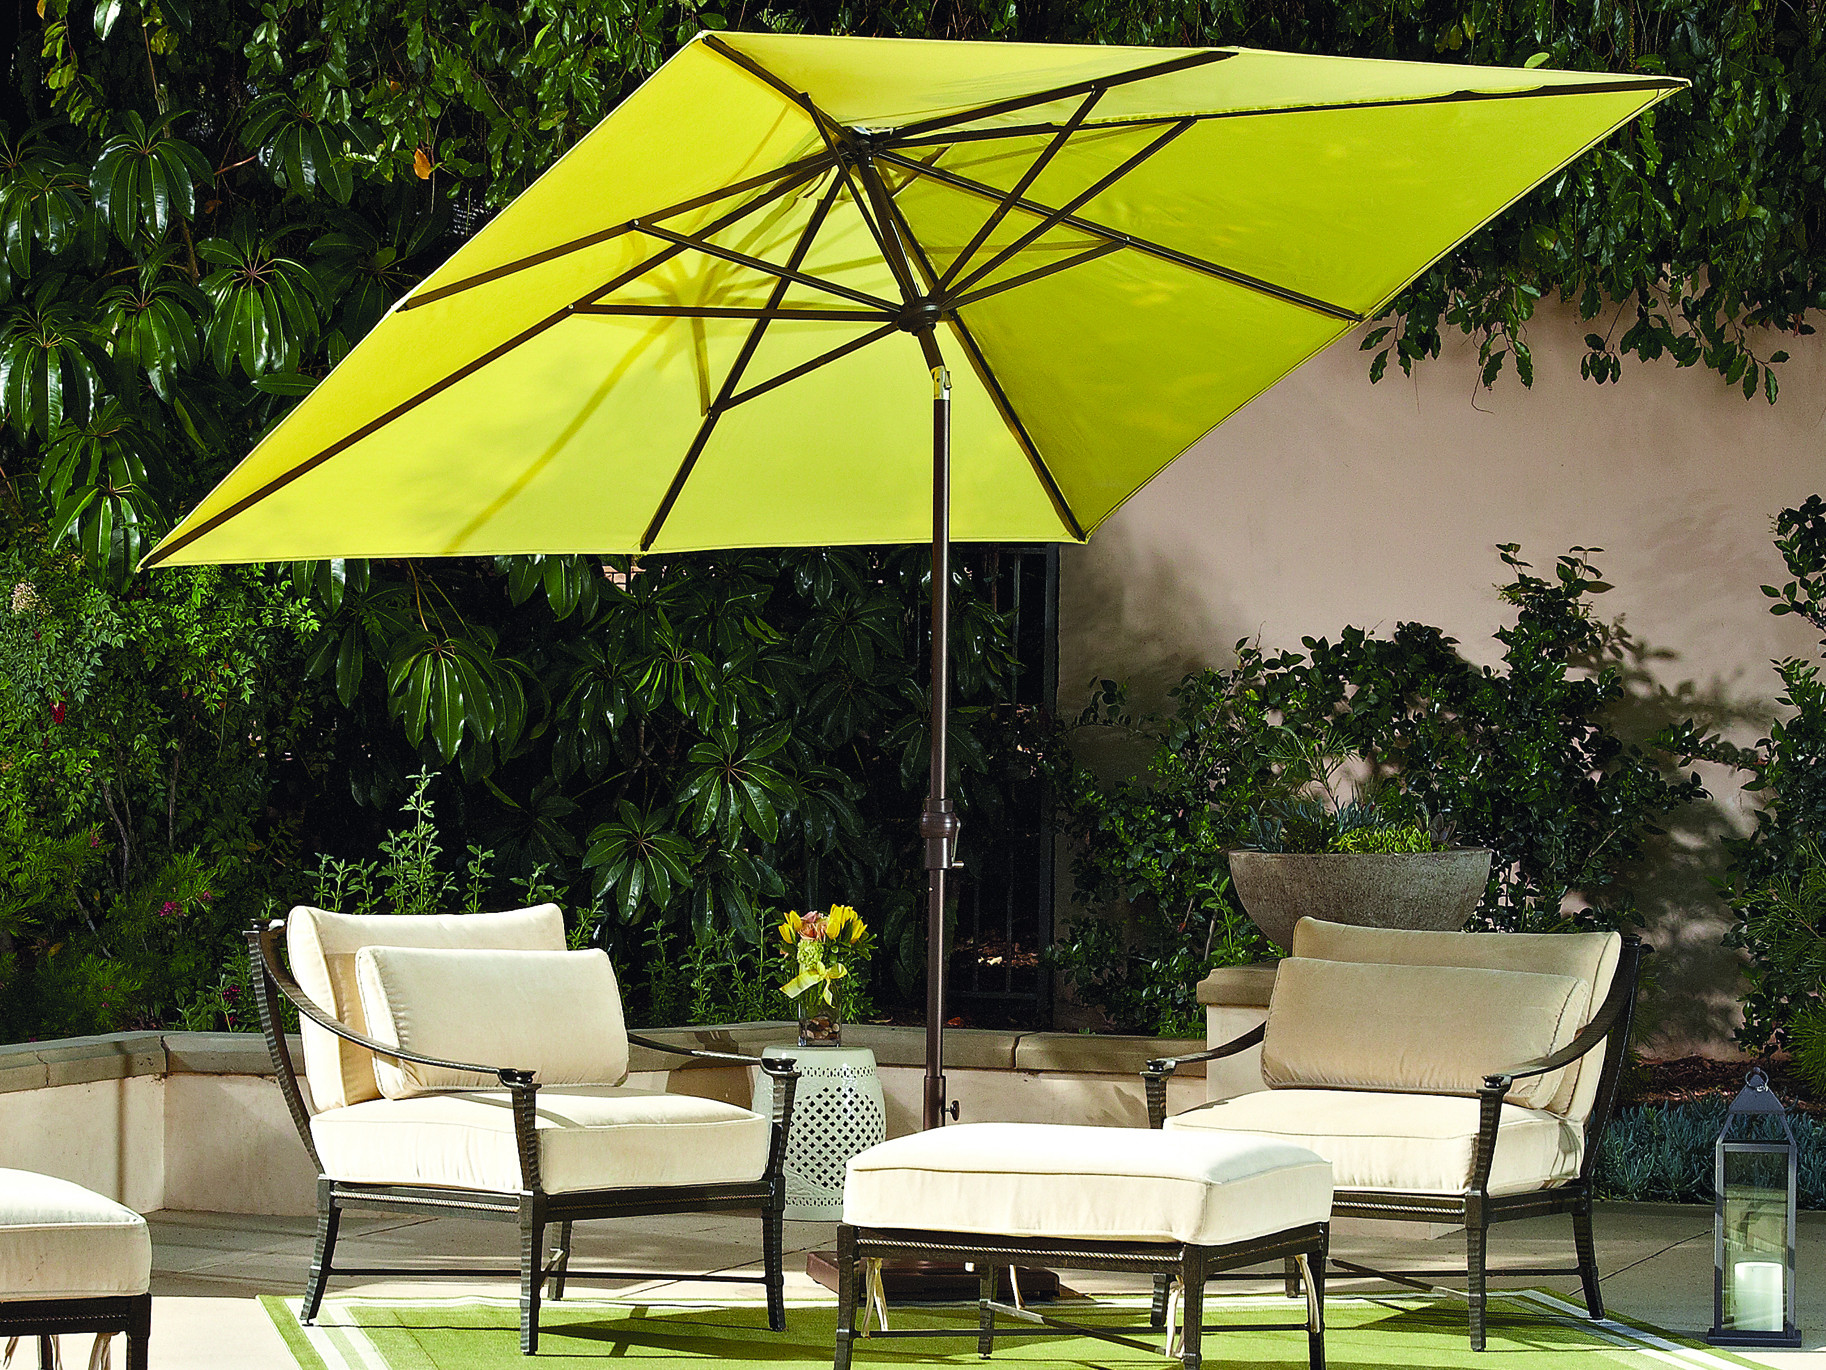 Best ideas about Outdoor Patio Umbrella
. Save or Pin Treasure Garden Market Aluminum 8x10 Foot Rectangular Now.